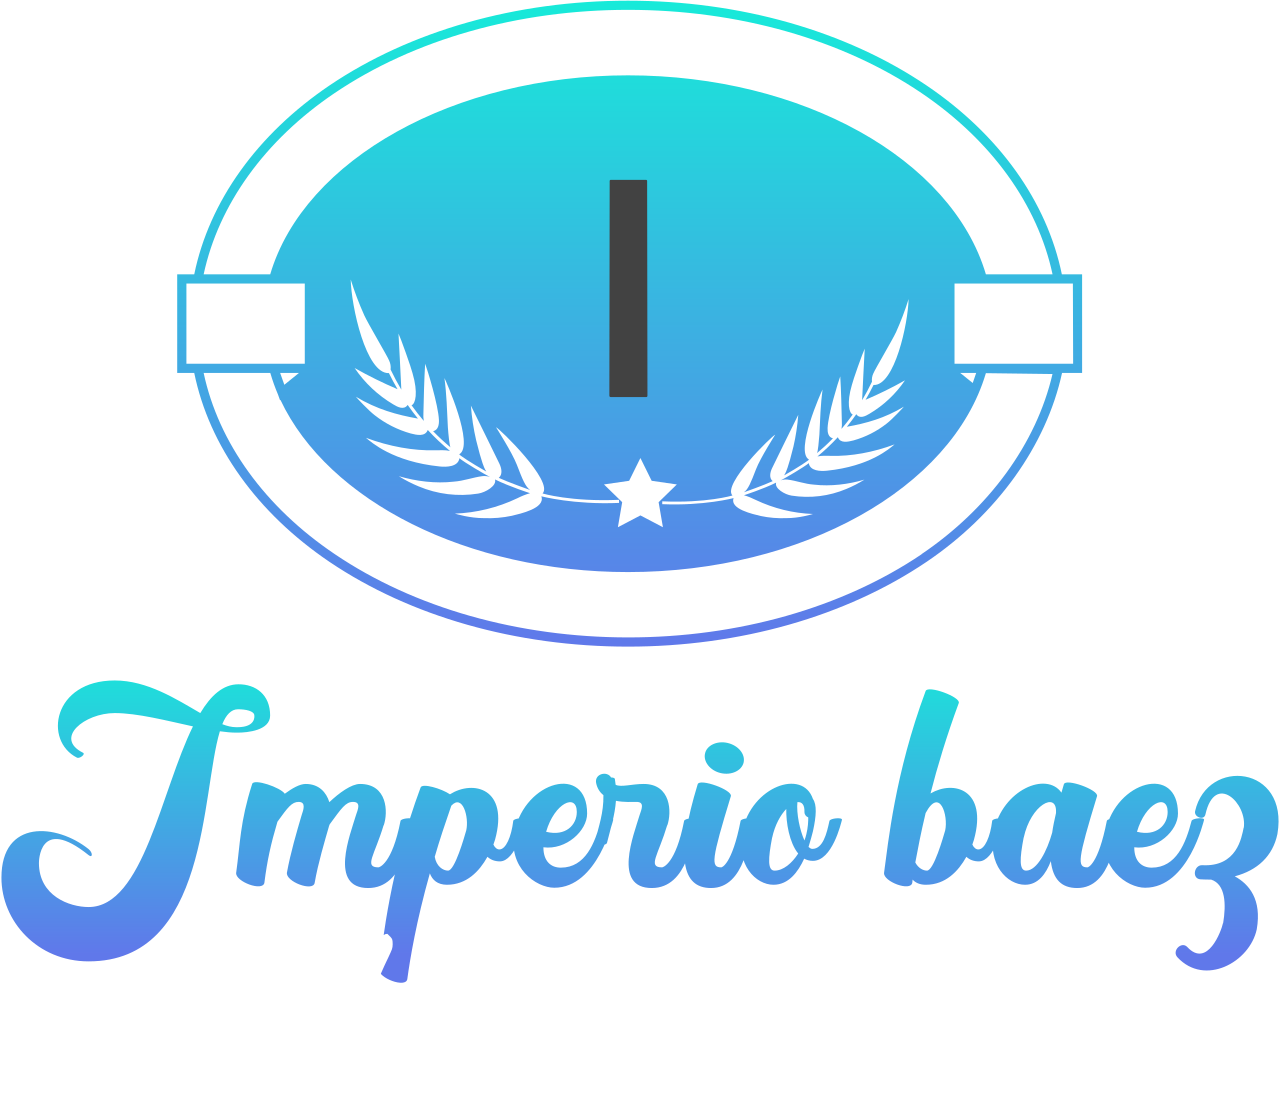 Imperio baez's logo